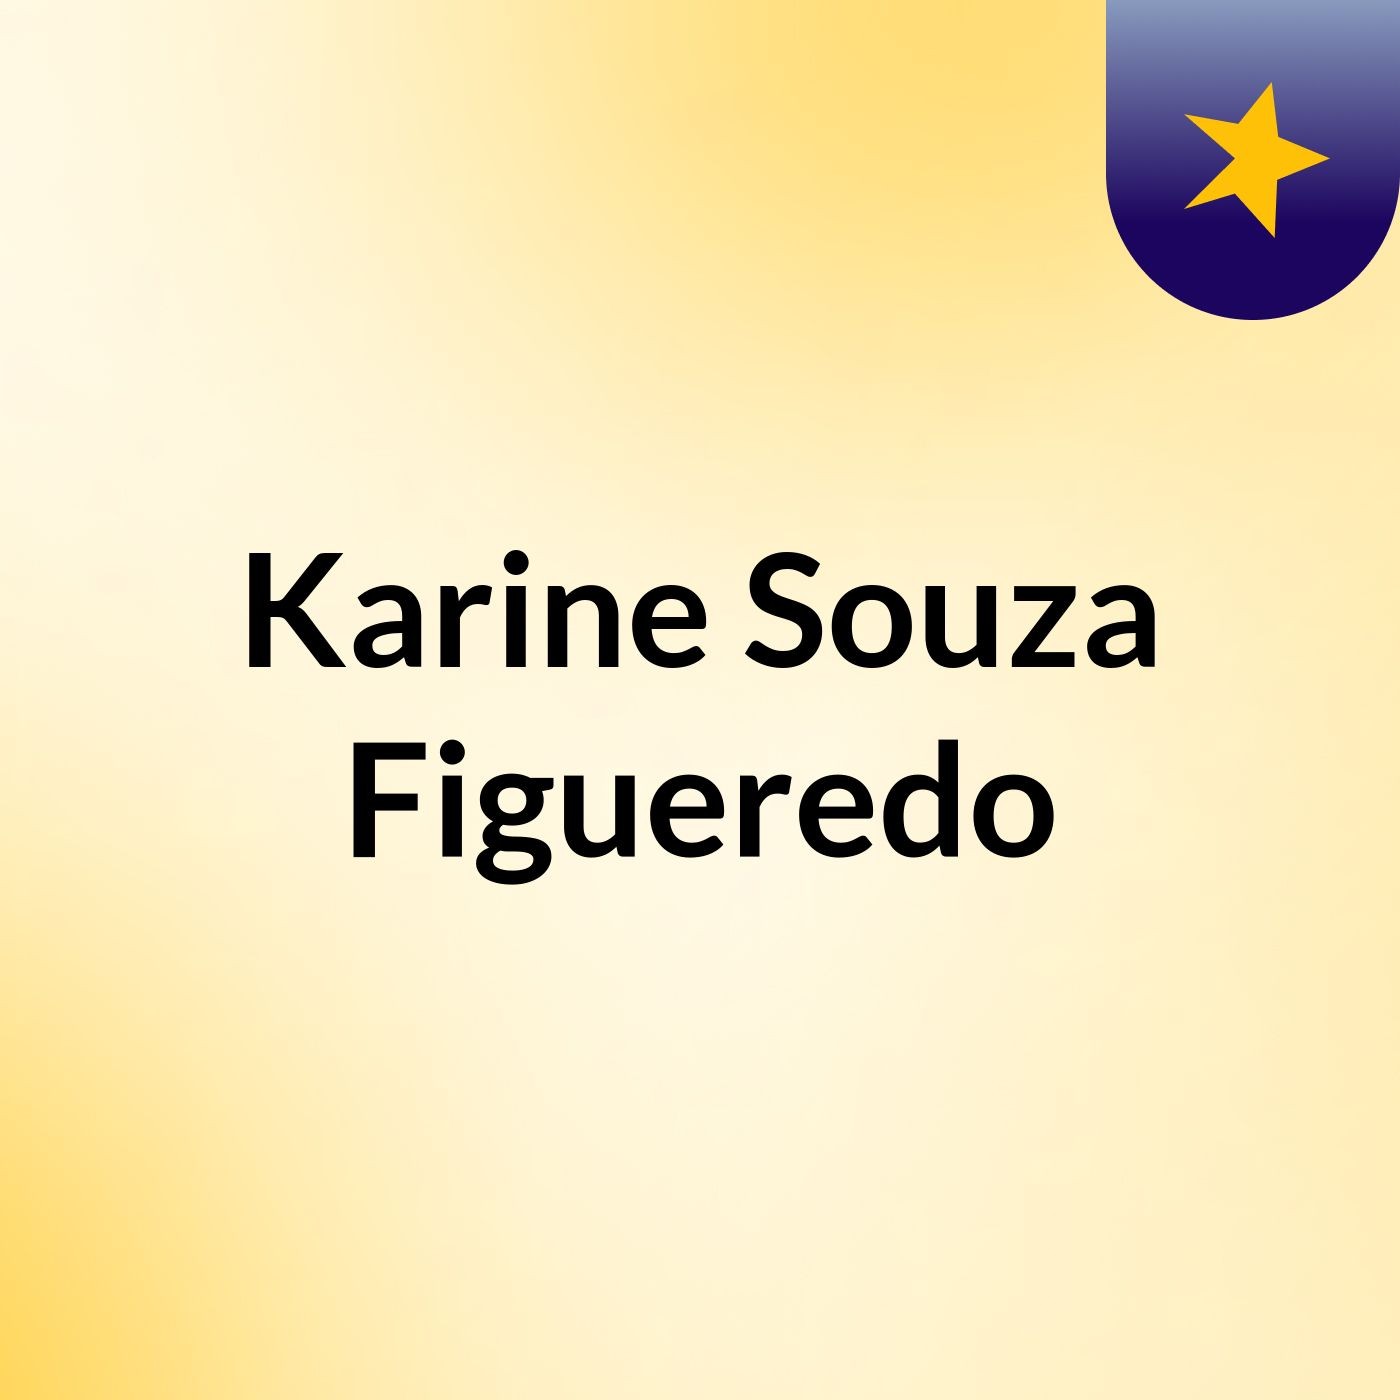 Karine Souza Figueredo